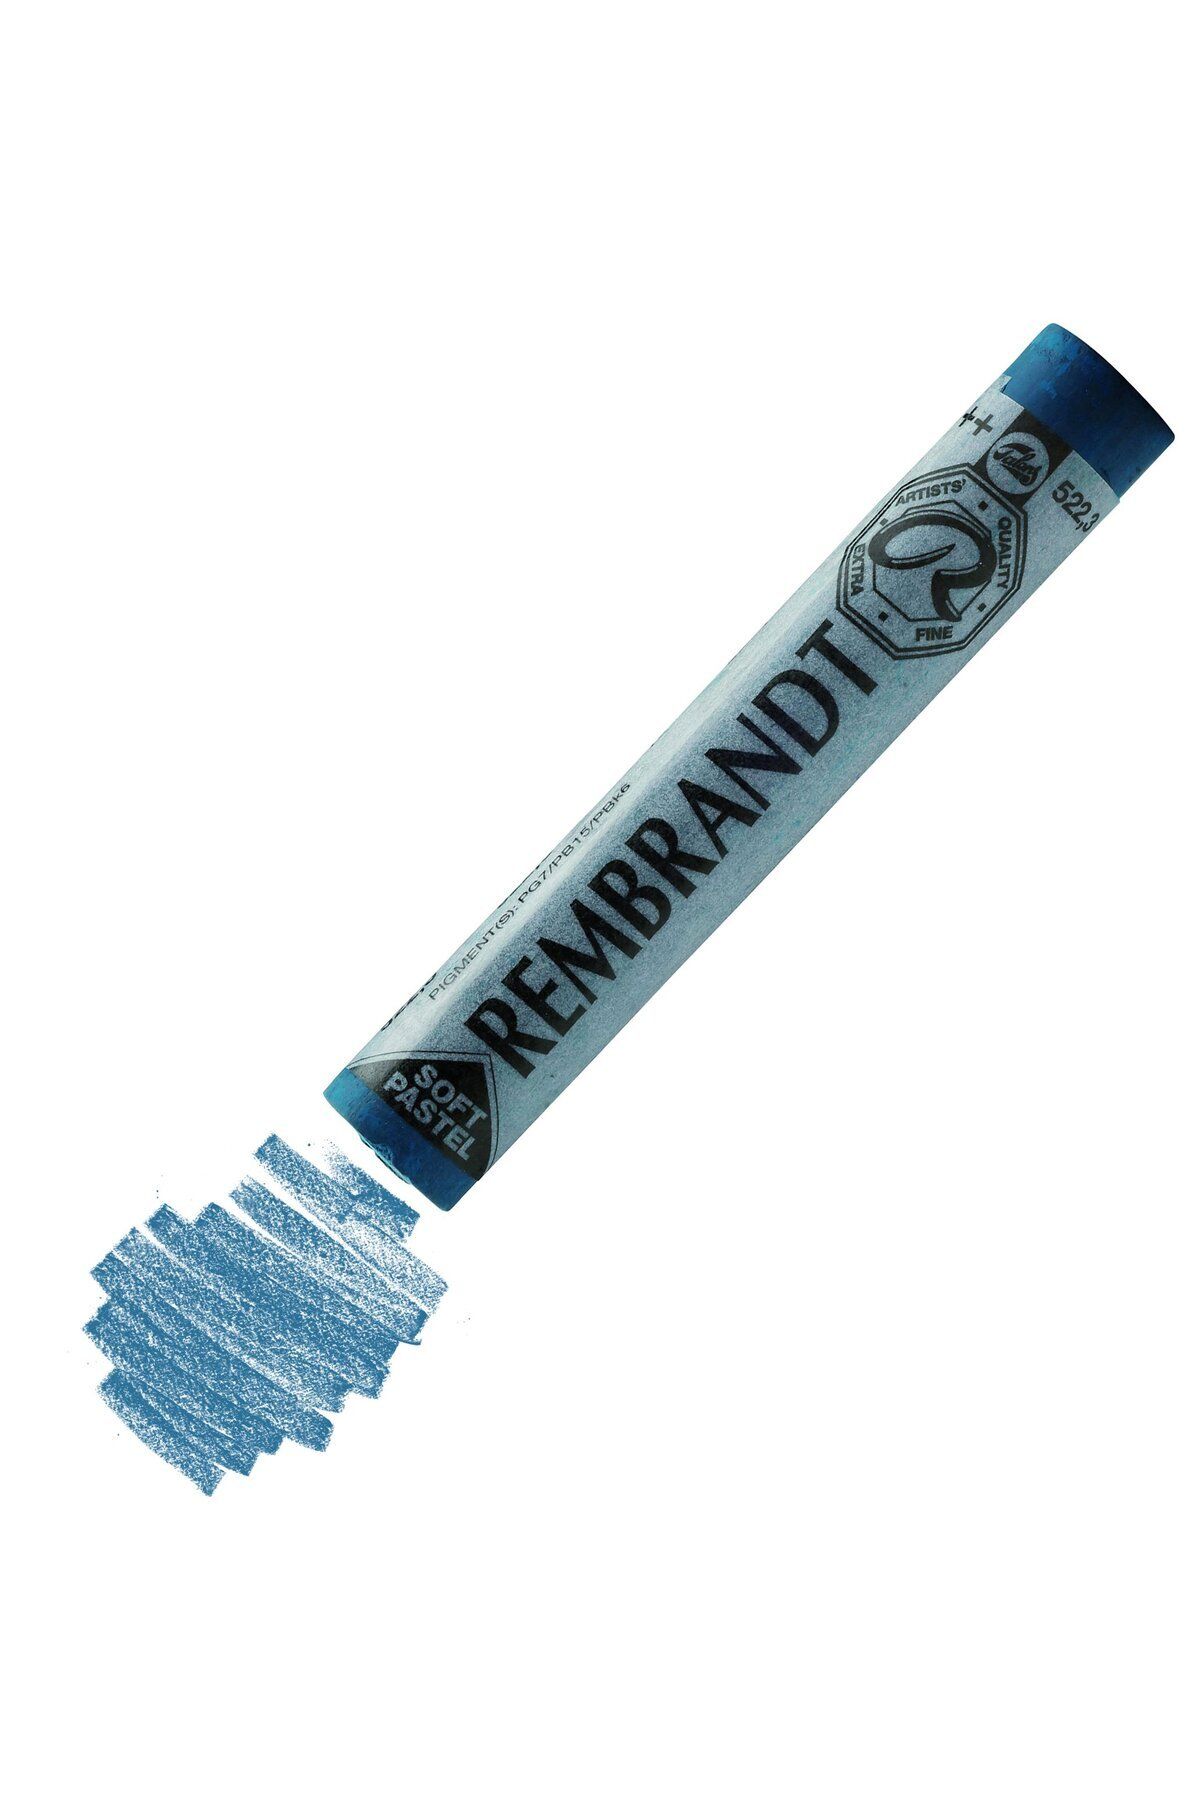 Rembrandt Soft Pastel Boya Tekli Yedek Renk 522-2 Turquoise Blue